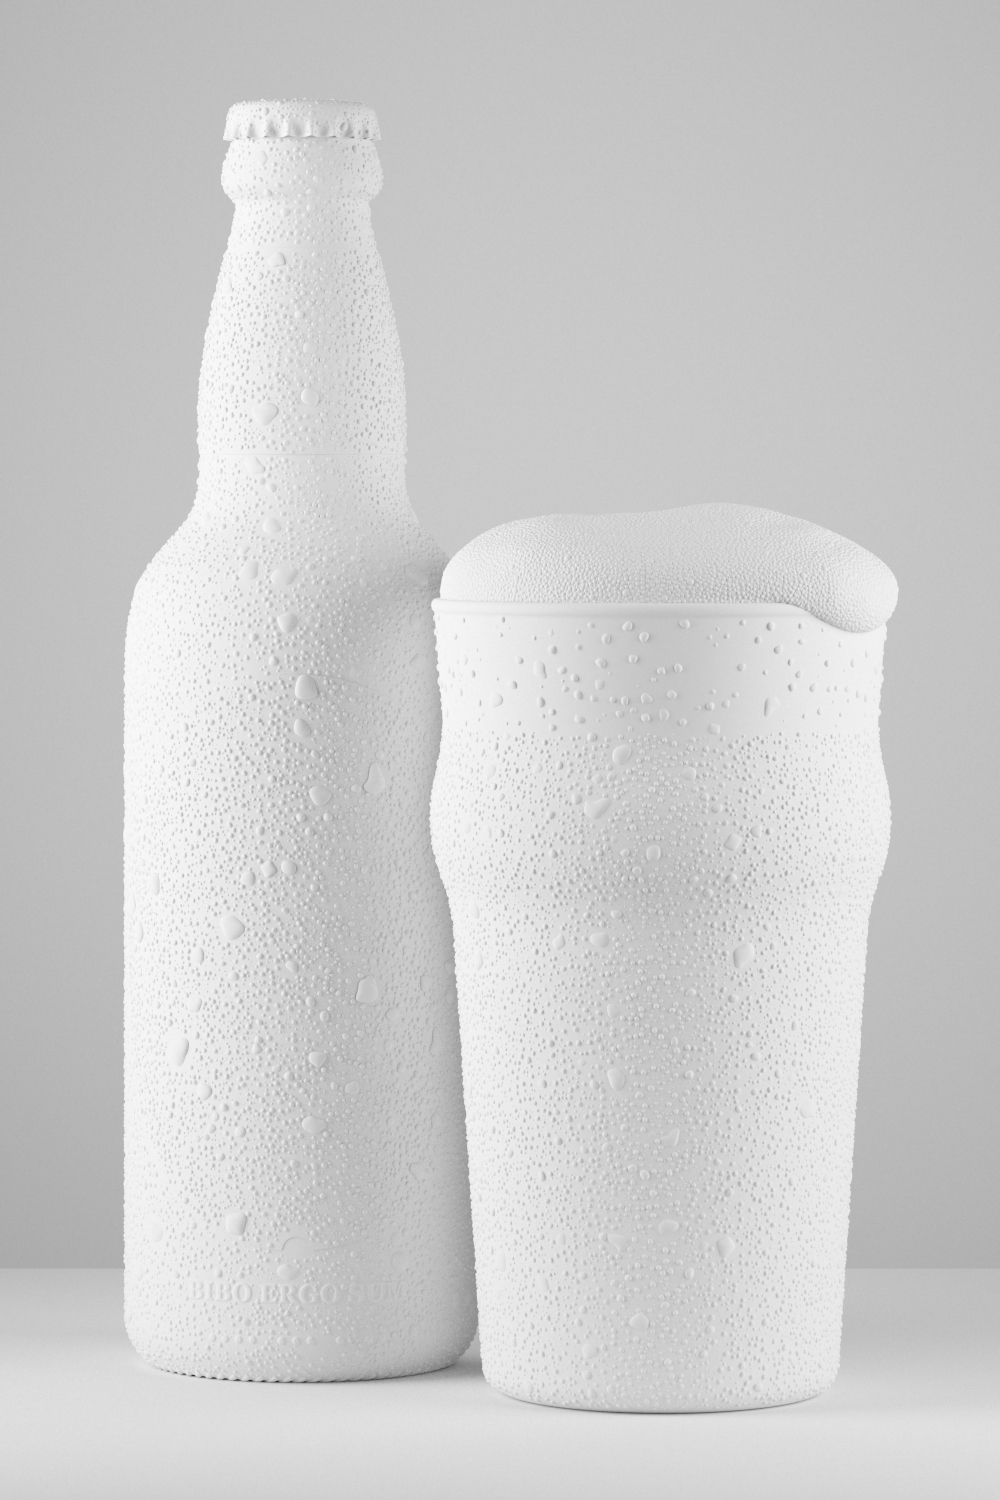 CGI 3D realistic Render beer glass bottle vray Packshot visualization drops photoreal Foam